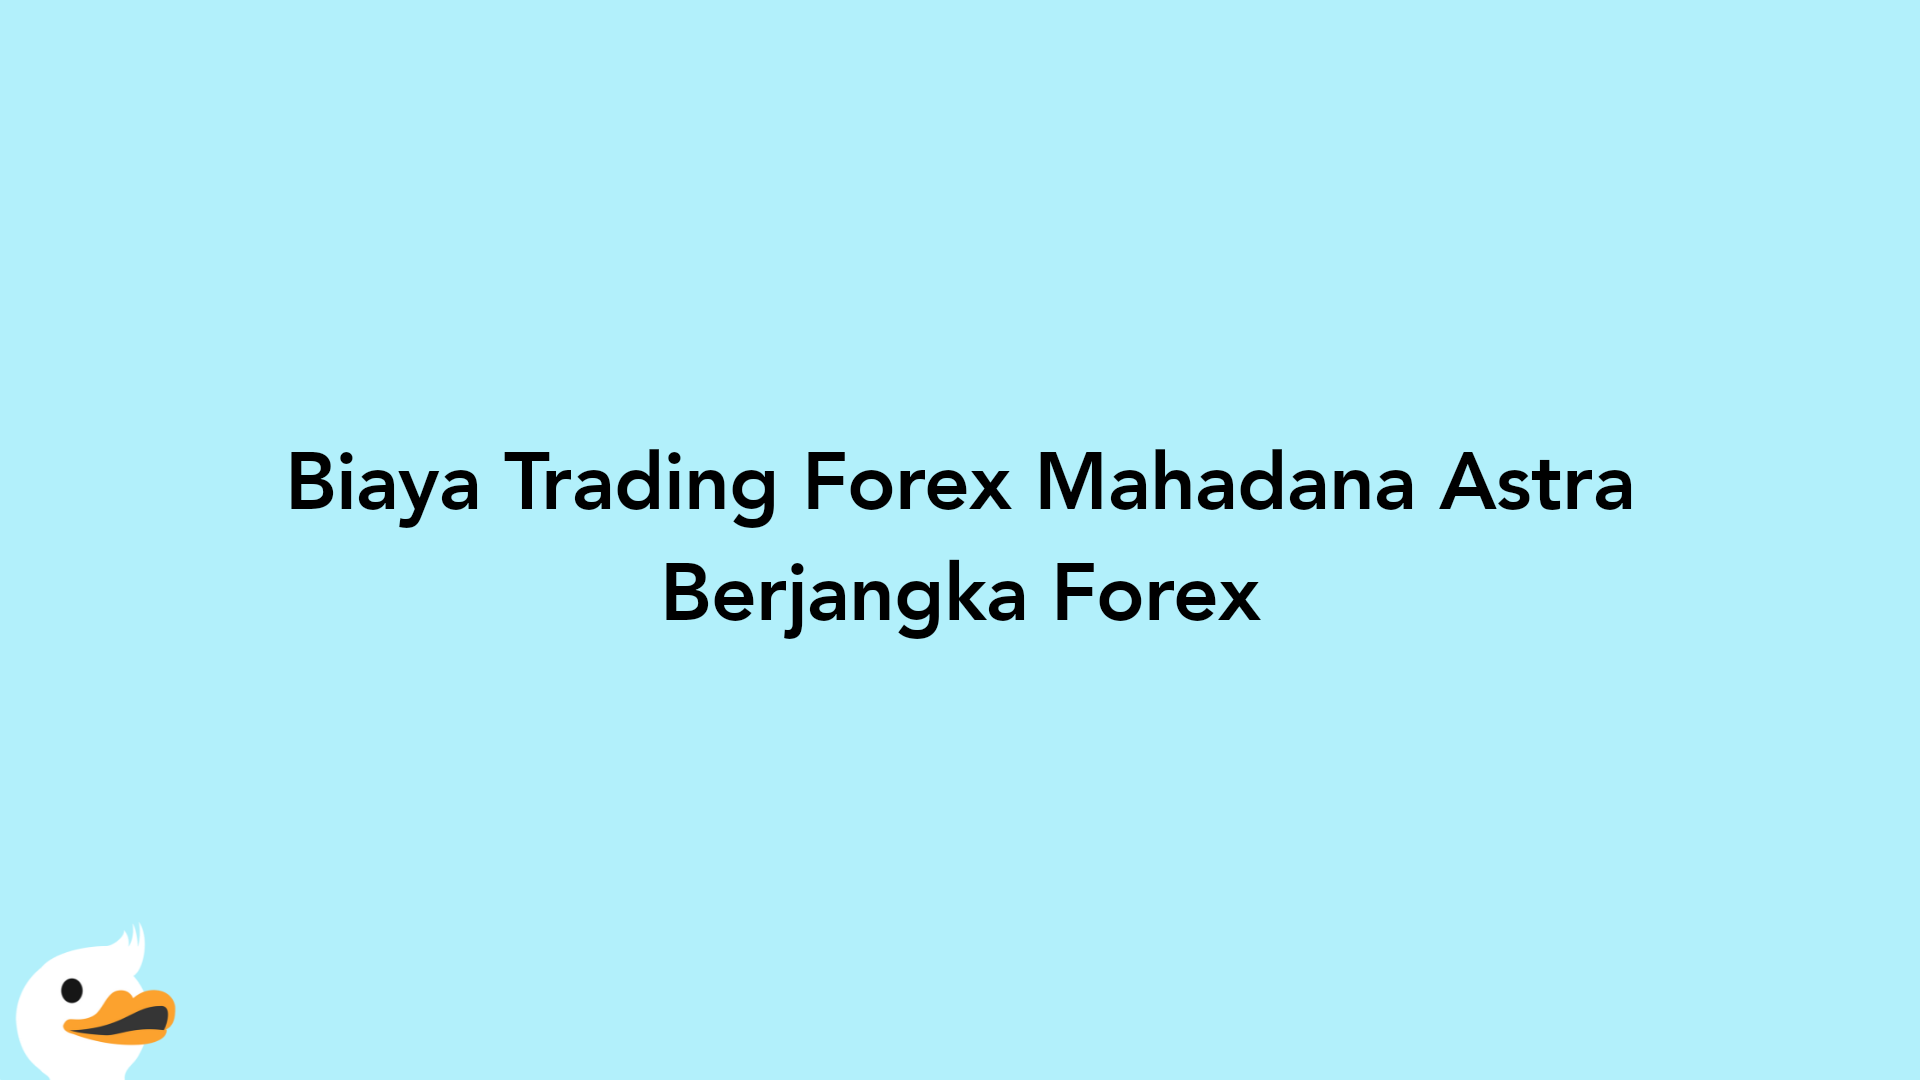 Biaya Trading Forex Mahadana Astra Berjangka Forex